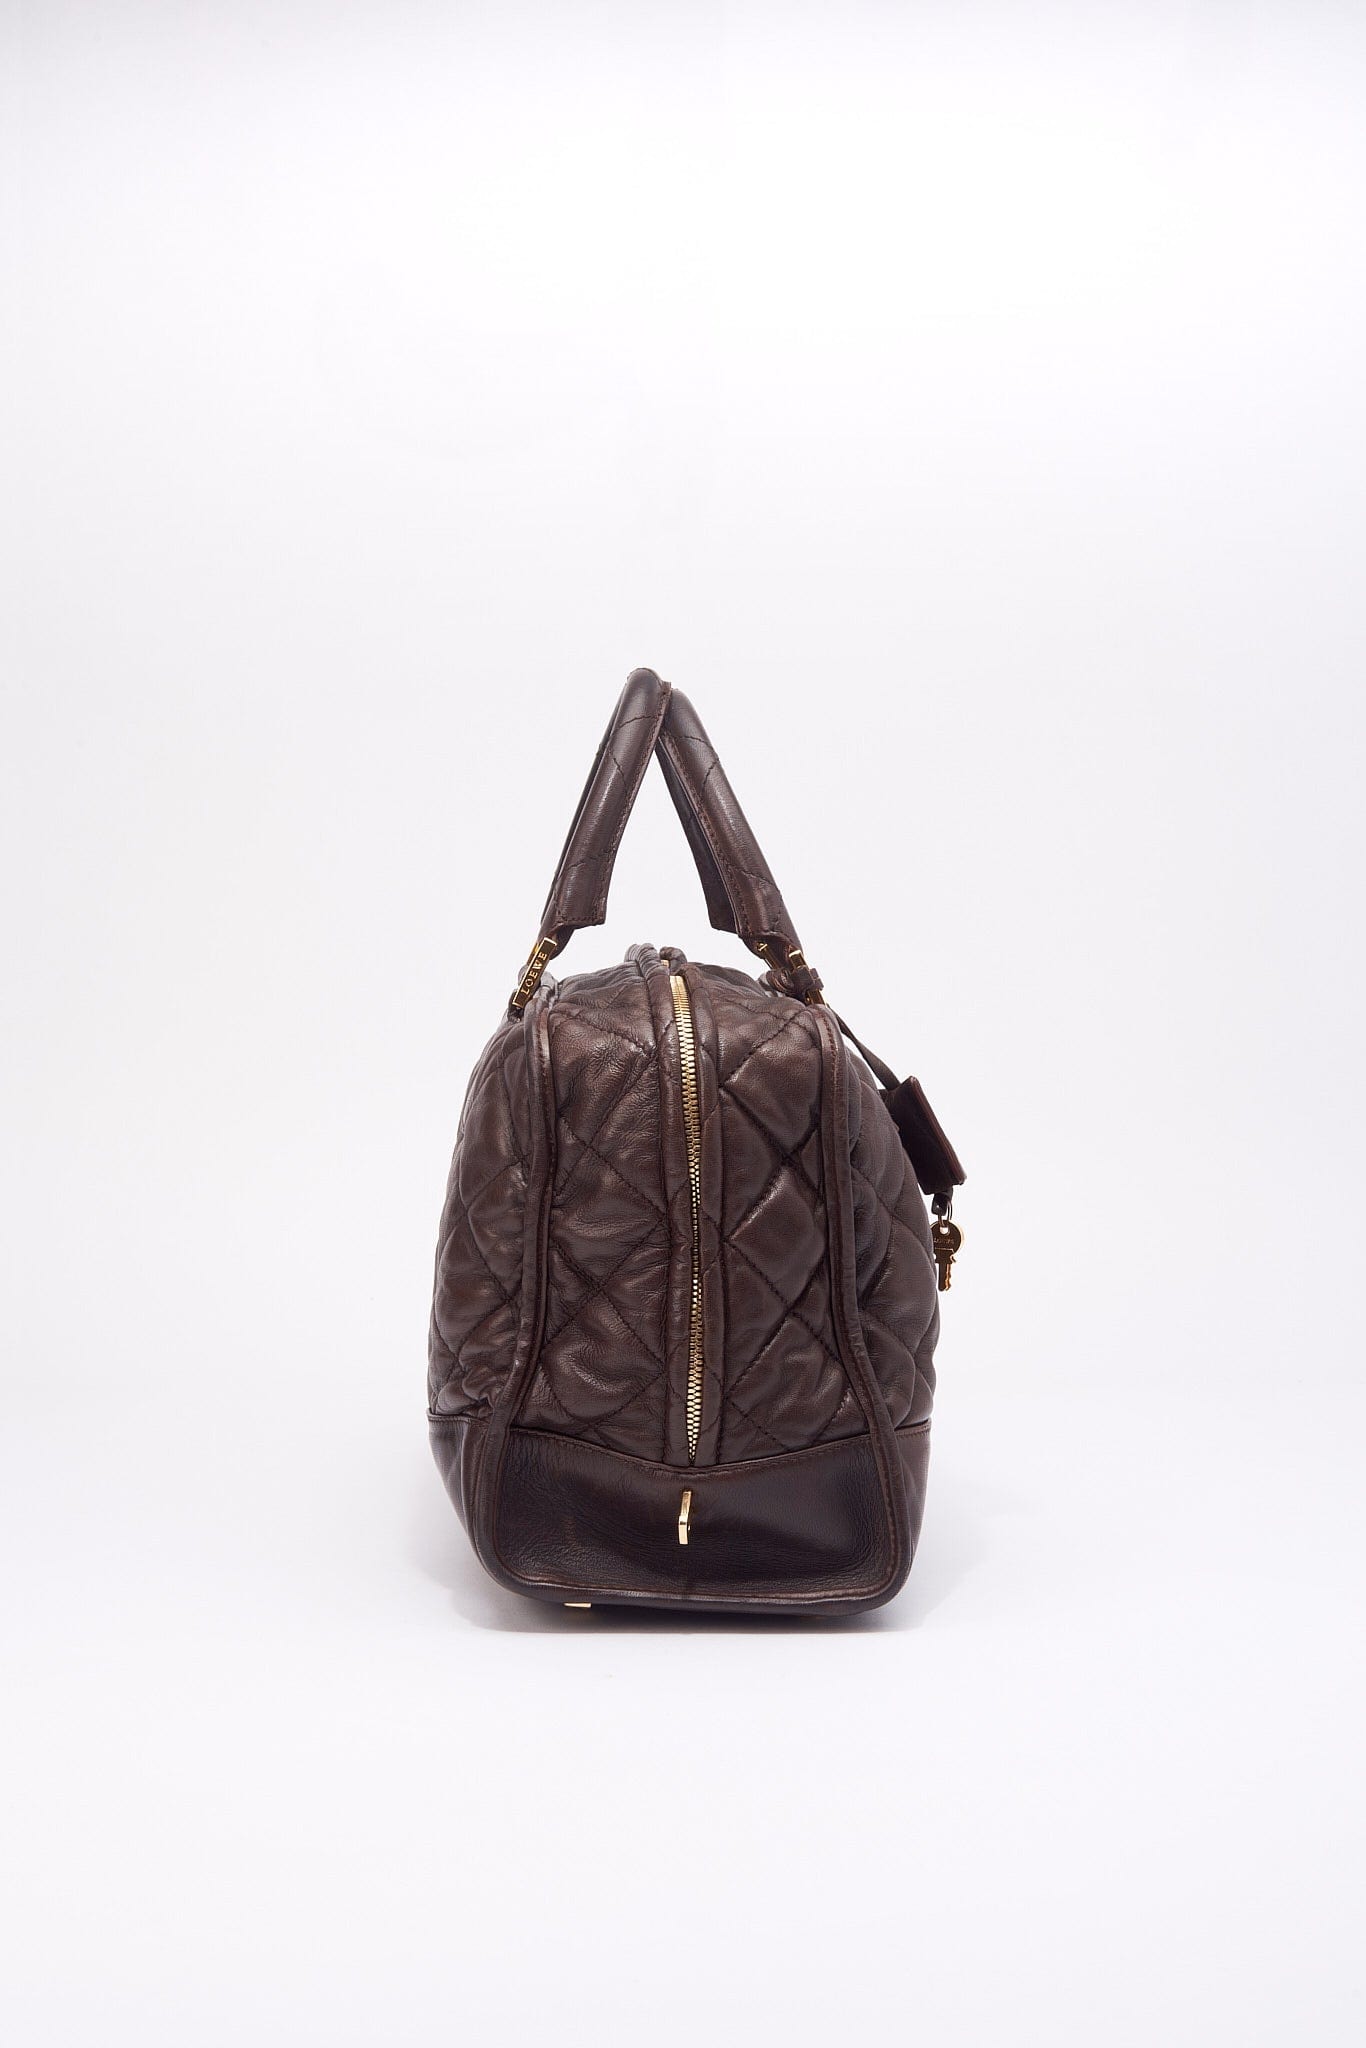 Vintage Loewe Amazona Quilted Brown Leather Shoulder Bag